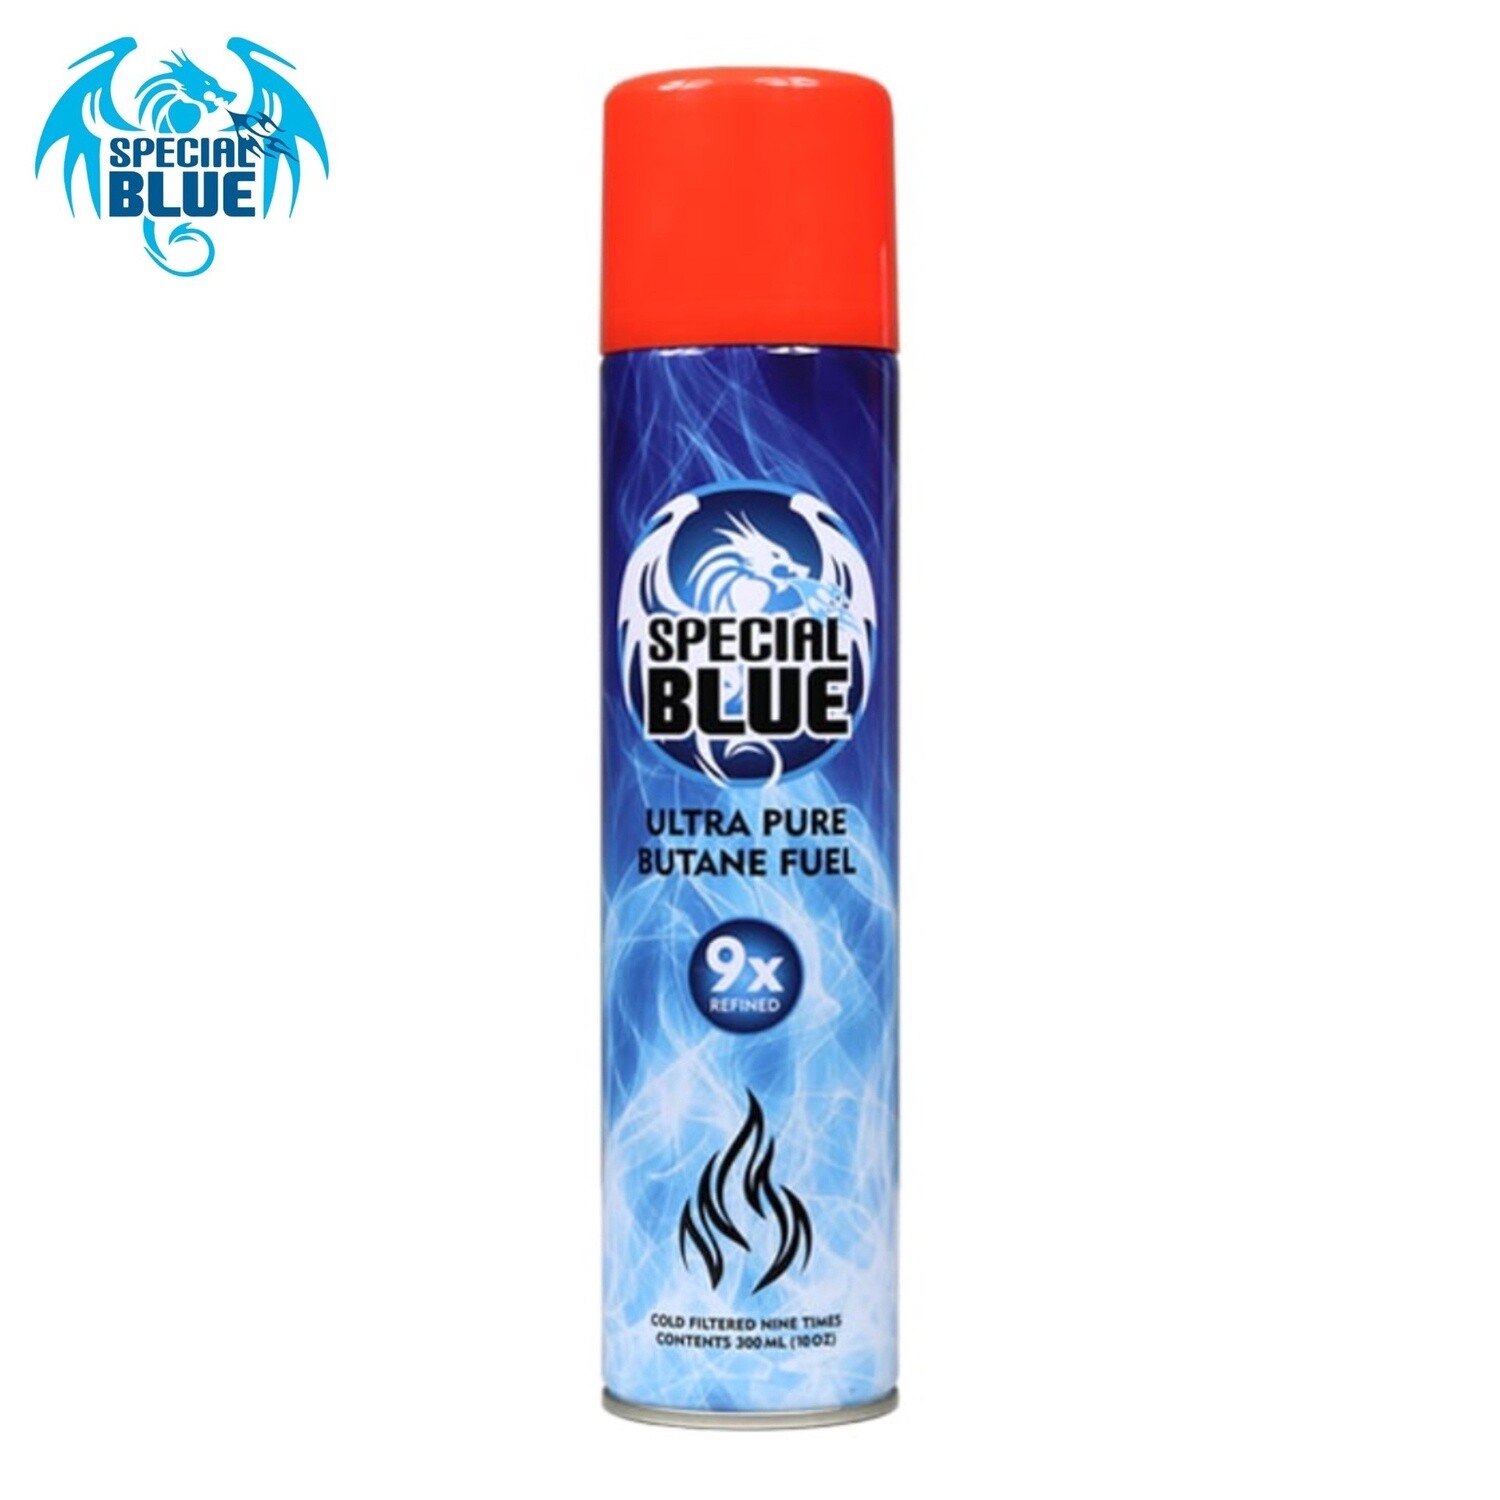 Special Blue™ 9X Refined Butane